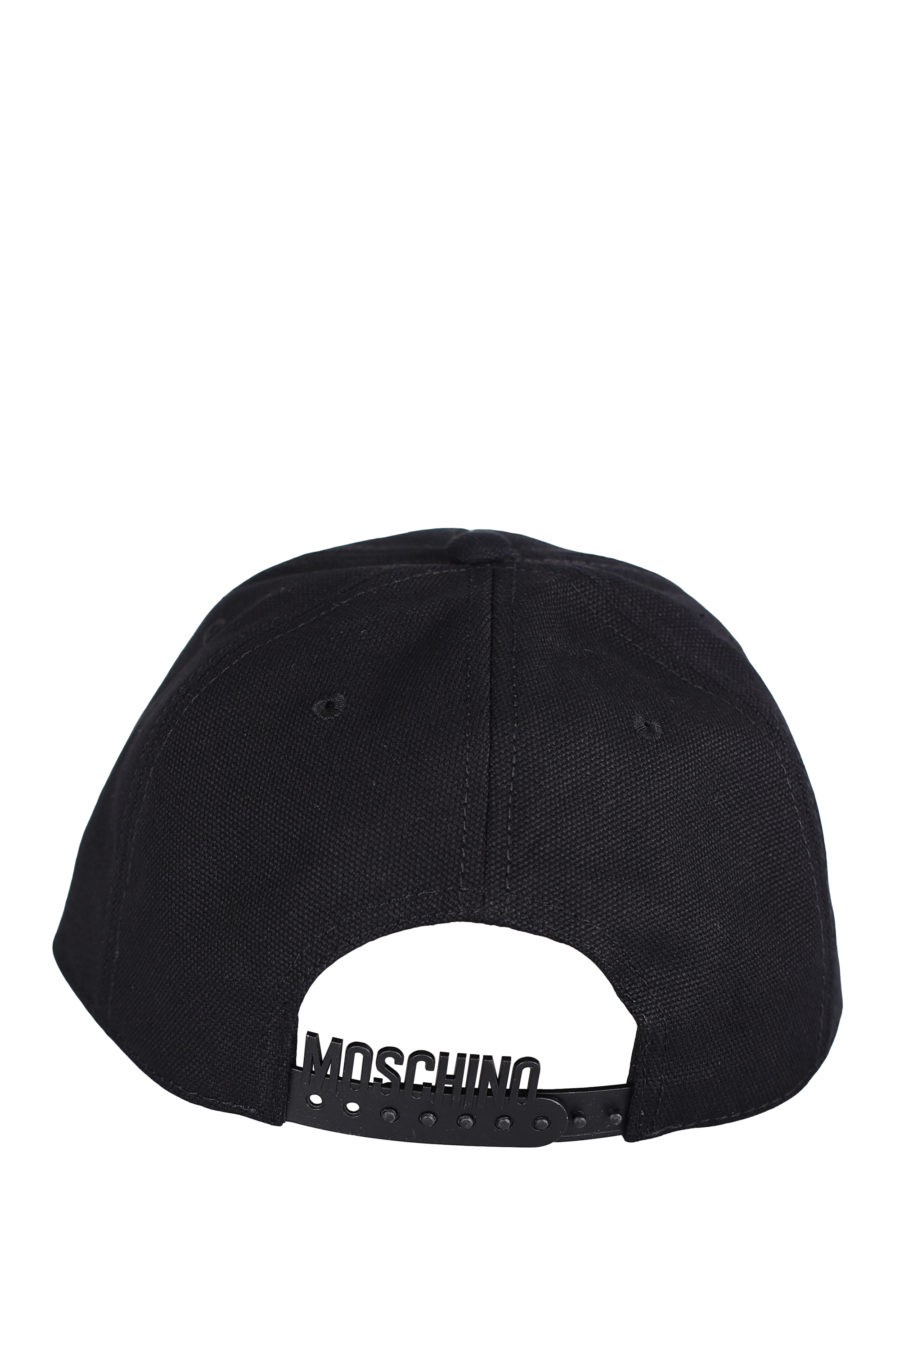 Black cap with "Smiley" logo - IMG 0808